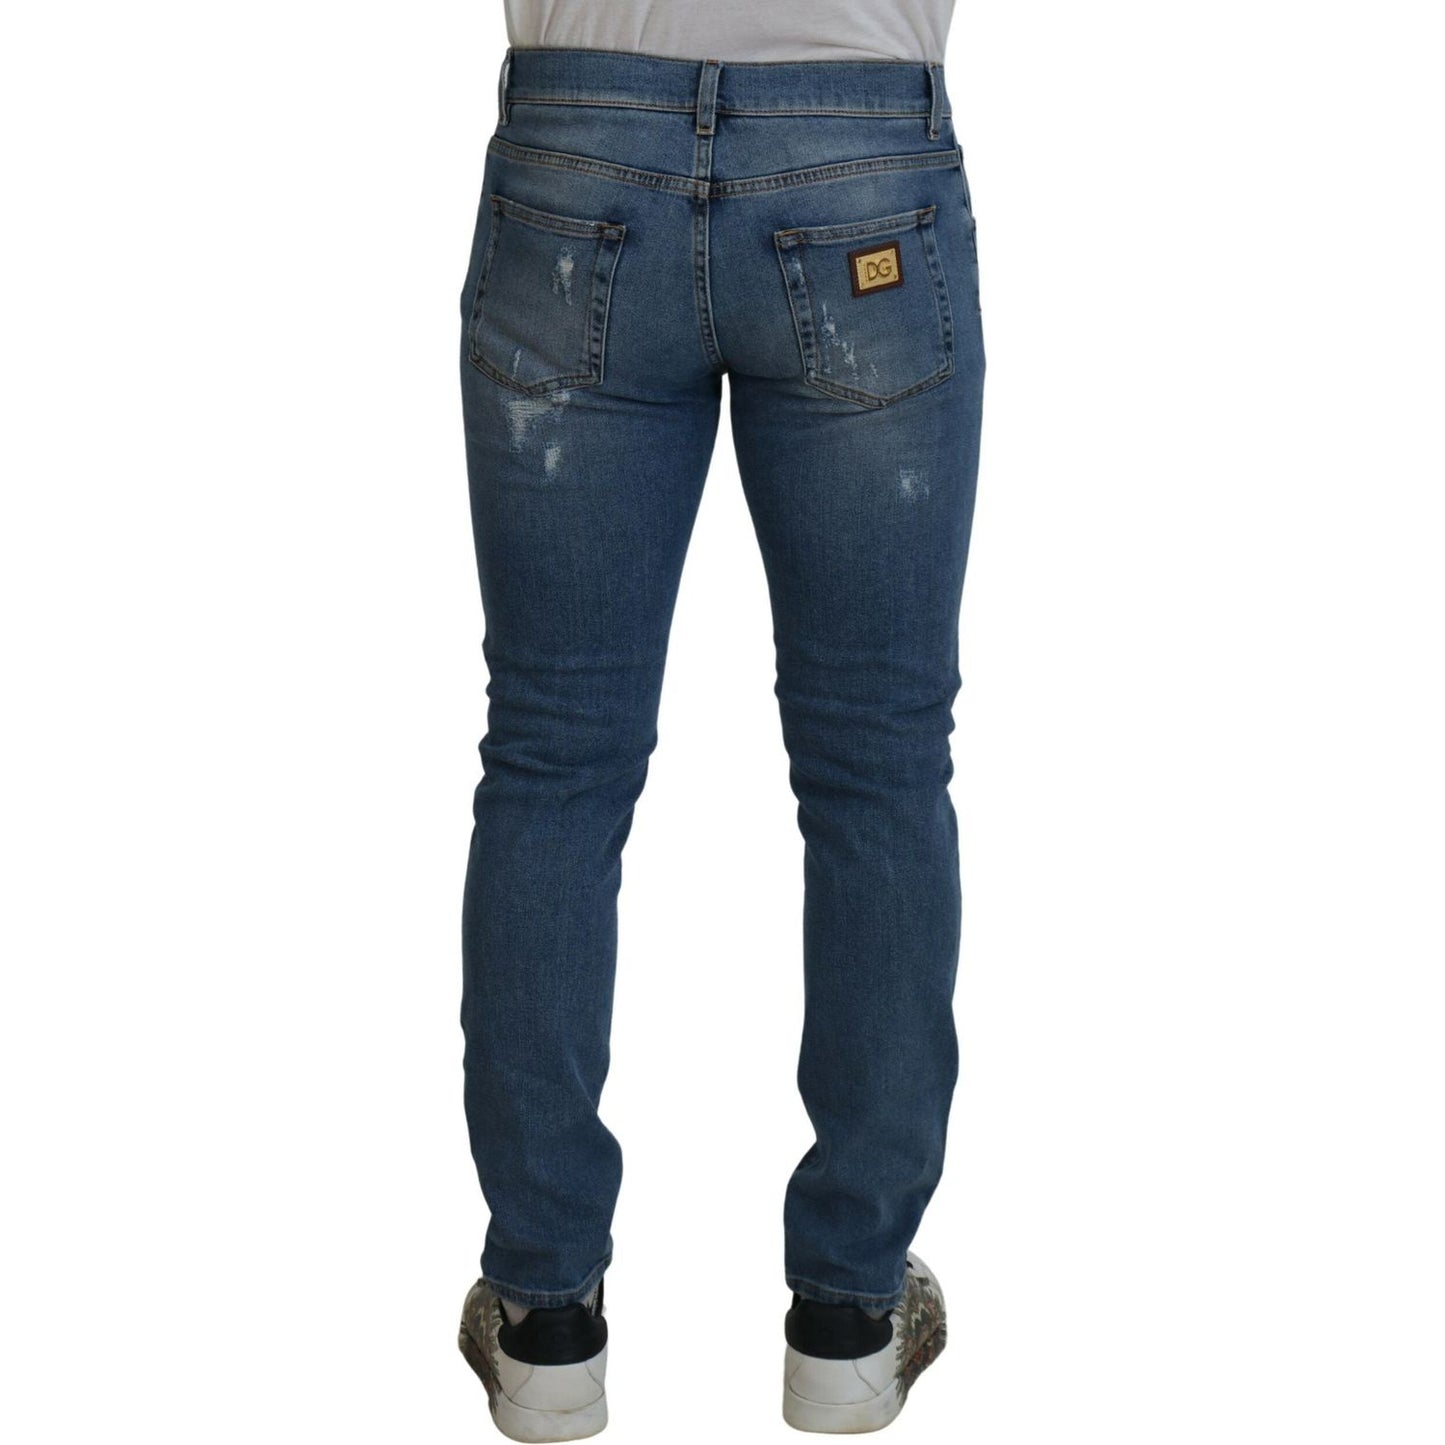 Dolce & Gabbana Chic Slim Fit Italian Denim Jeans blue-slim-fit-tattered-cotton-denim-jeans IMG_6141-scaled-6b44b65f-034.jpg